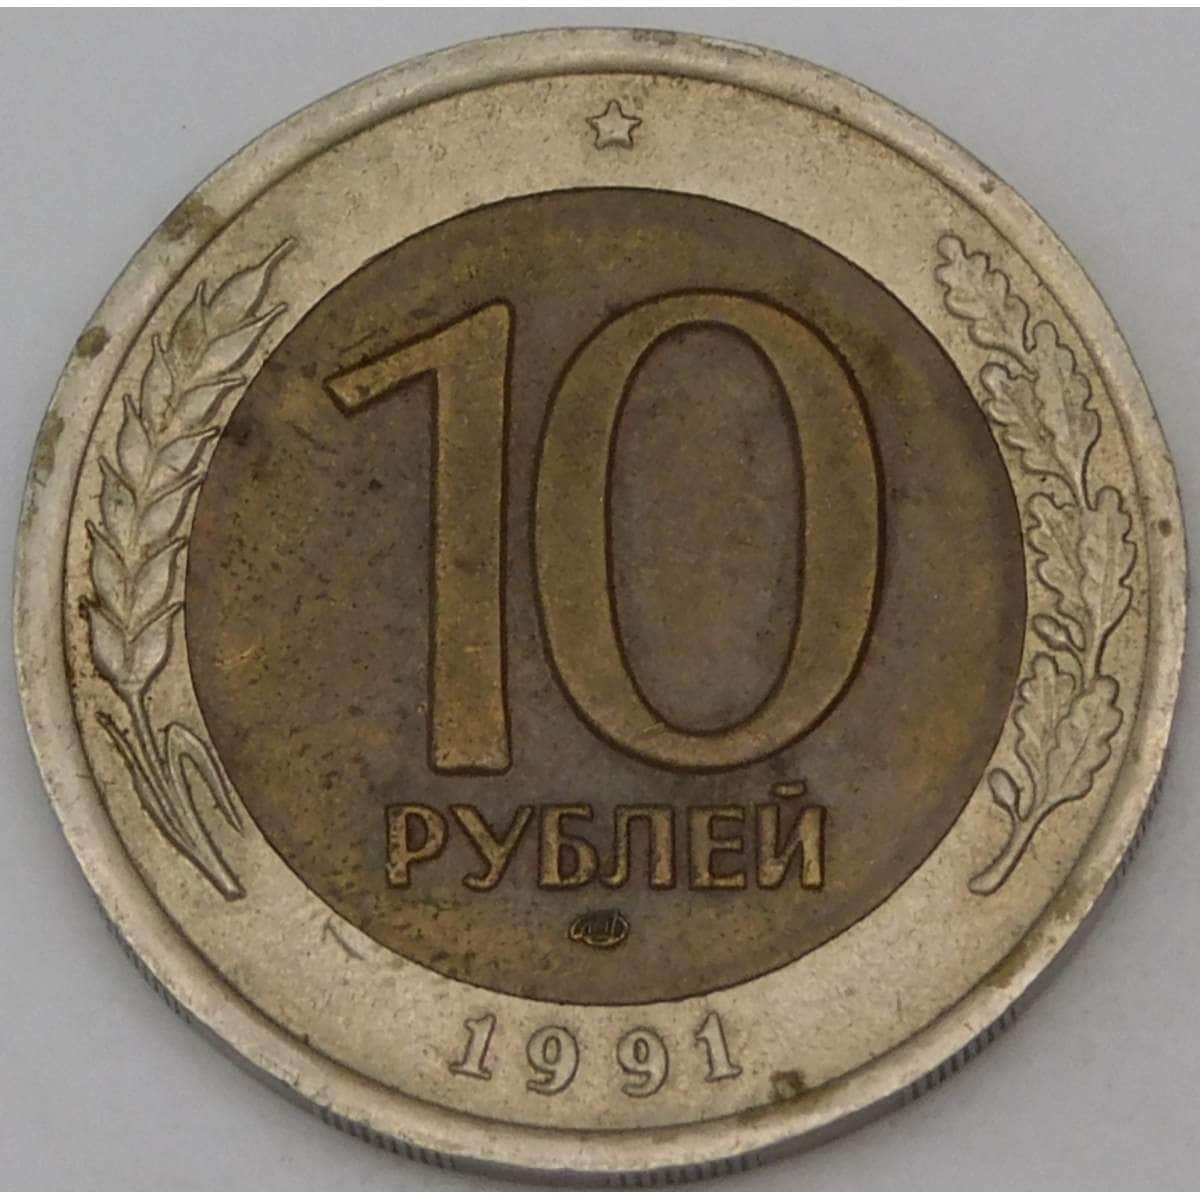 Steam рубли по 10 рублей фото 14